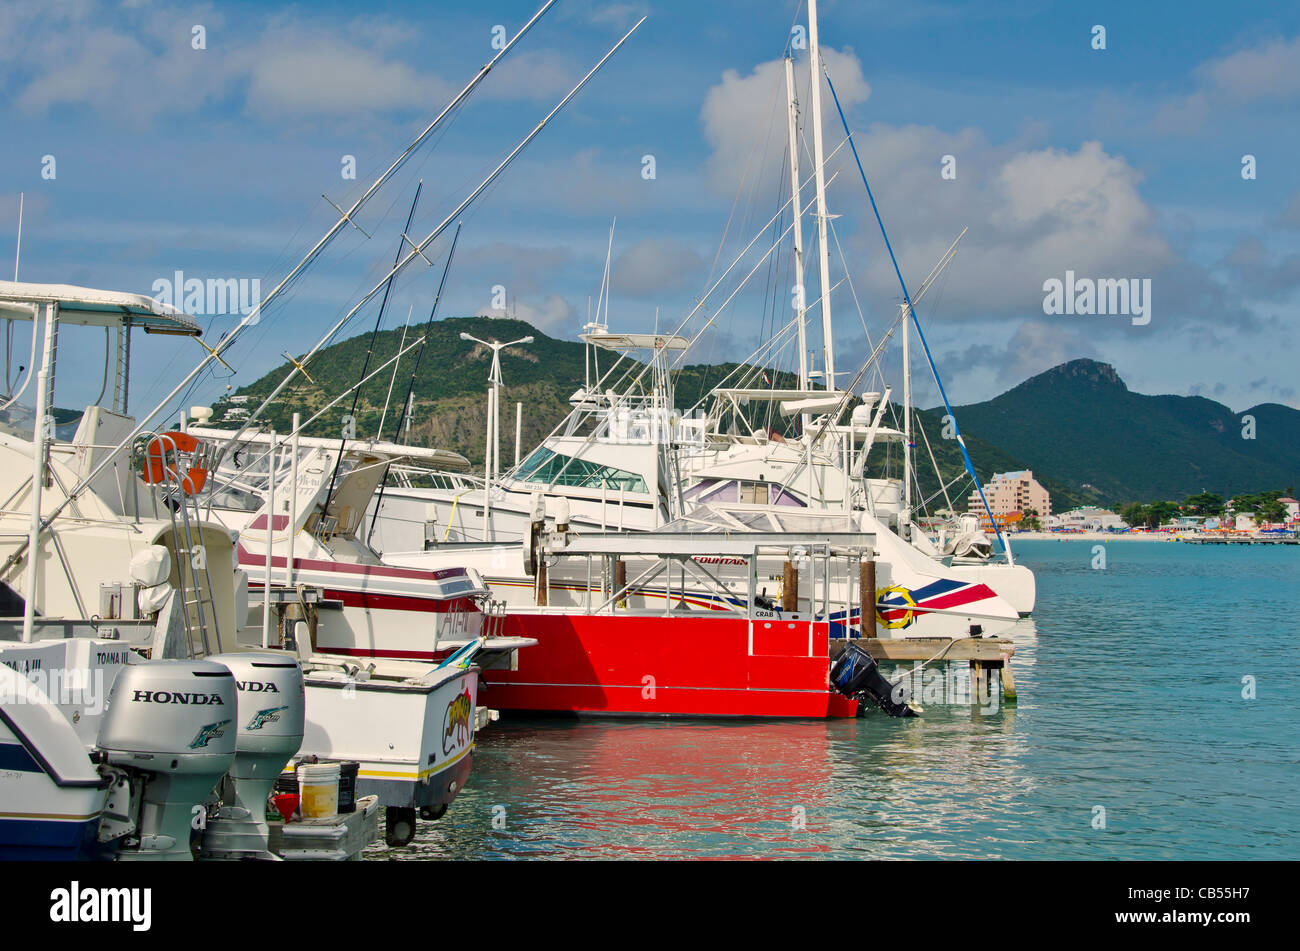 St Maarten Philipsburg marina with sailboats and motor boats Stock Photo